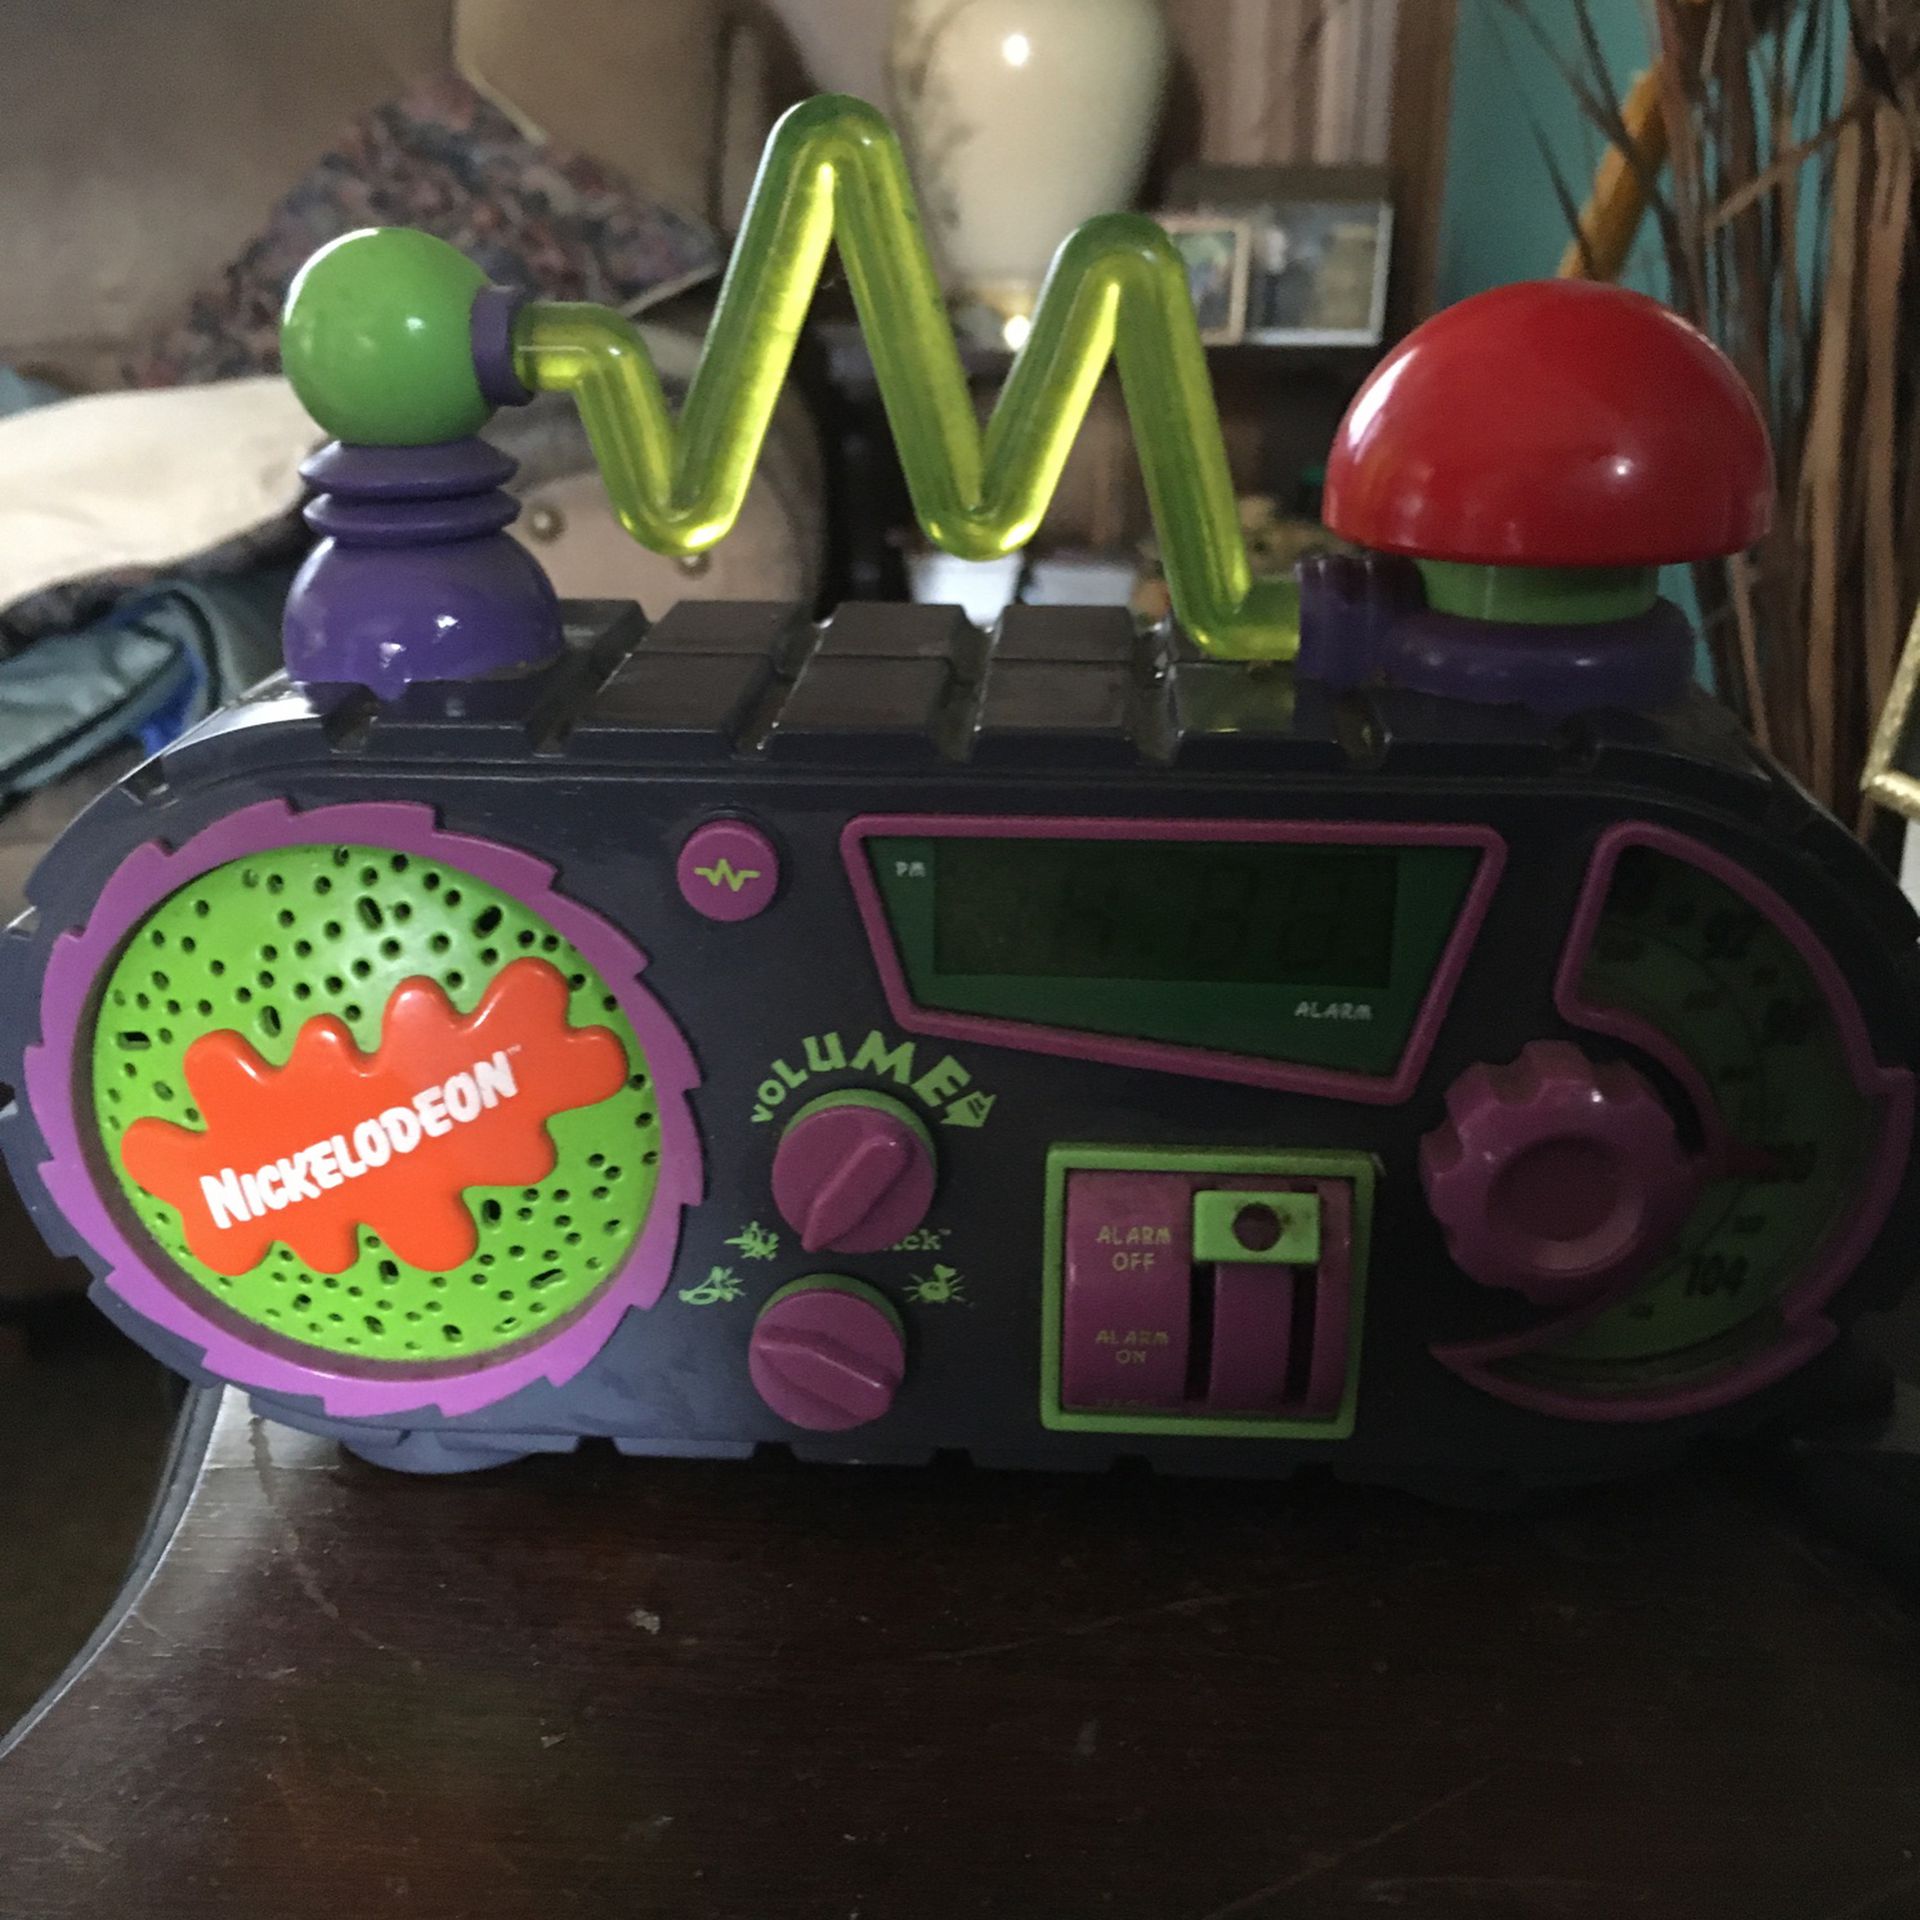 Nickelodeon Alarm Clock 